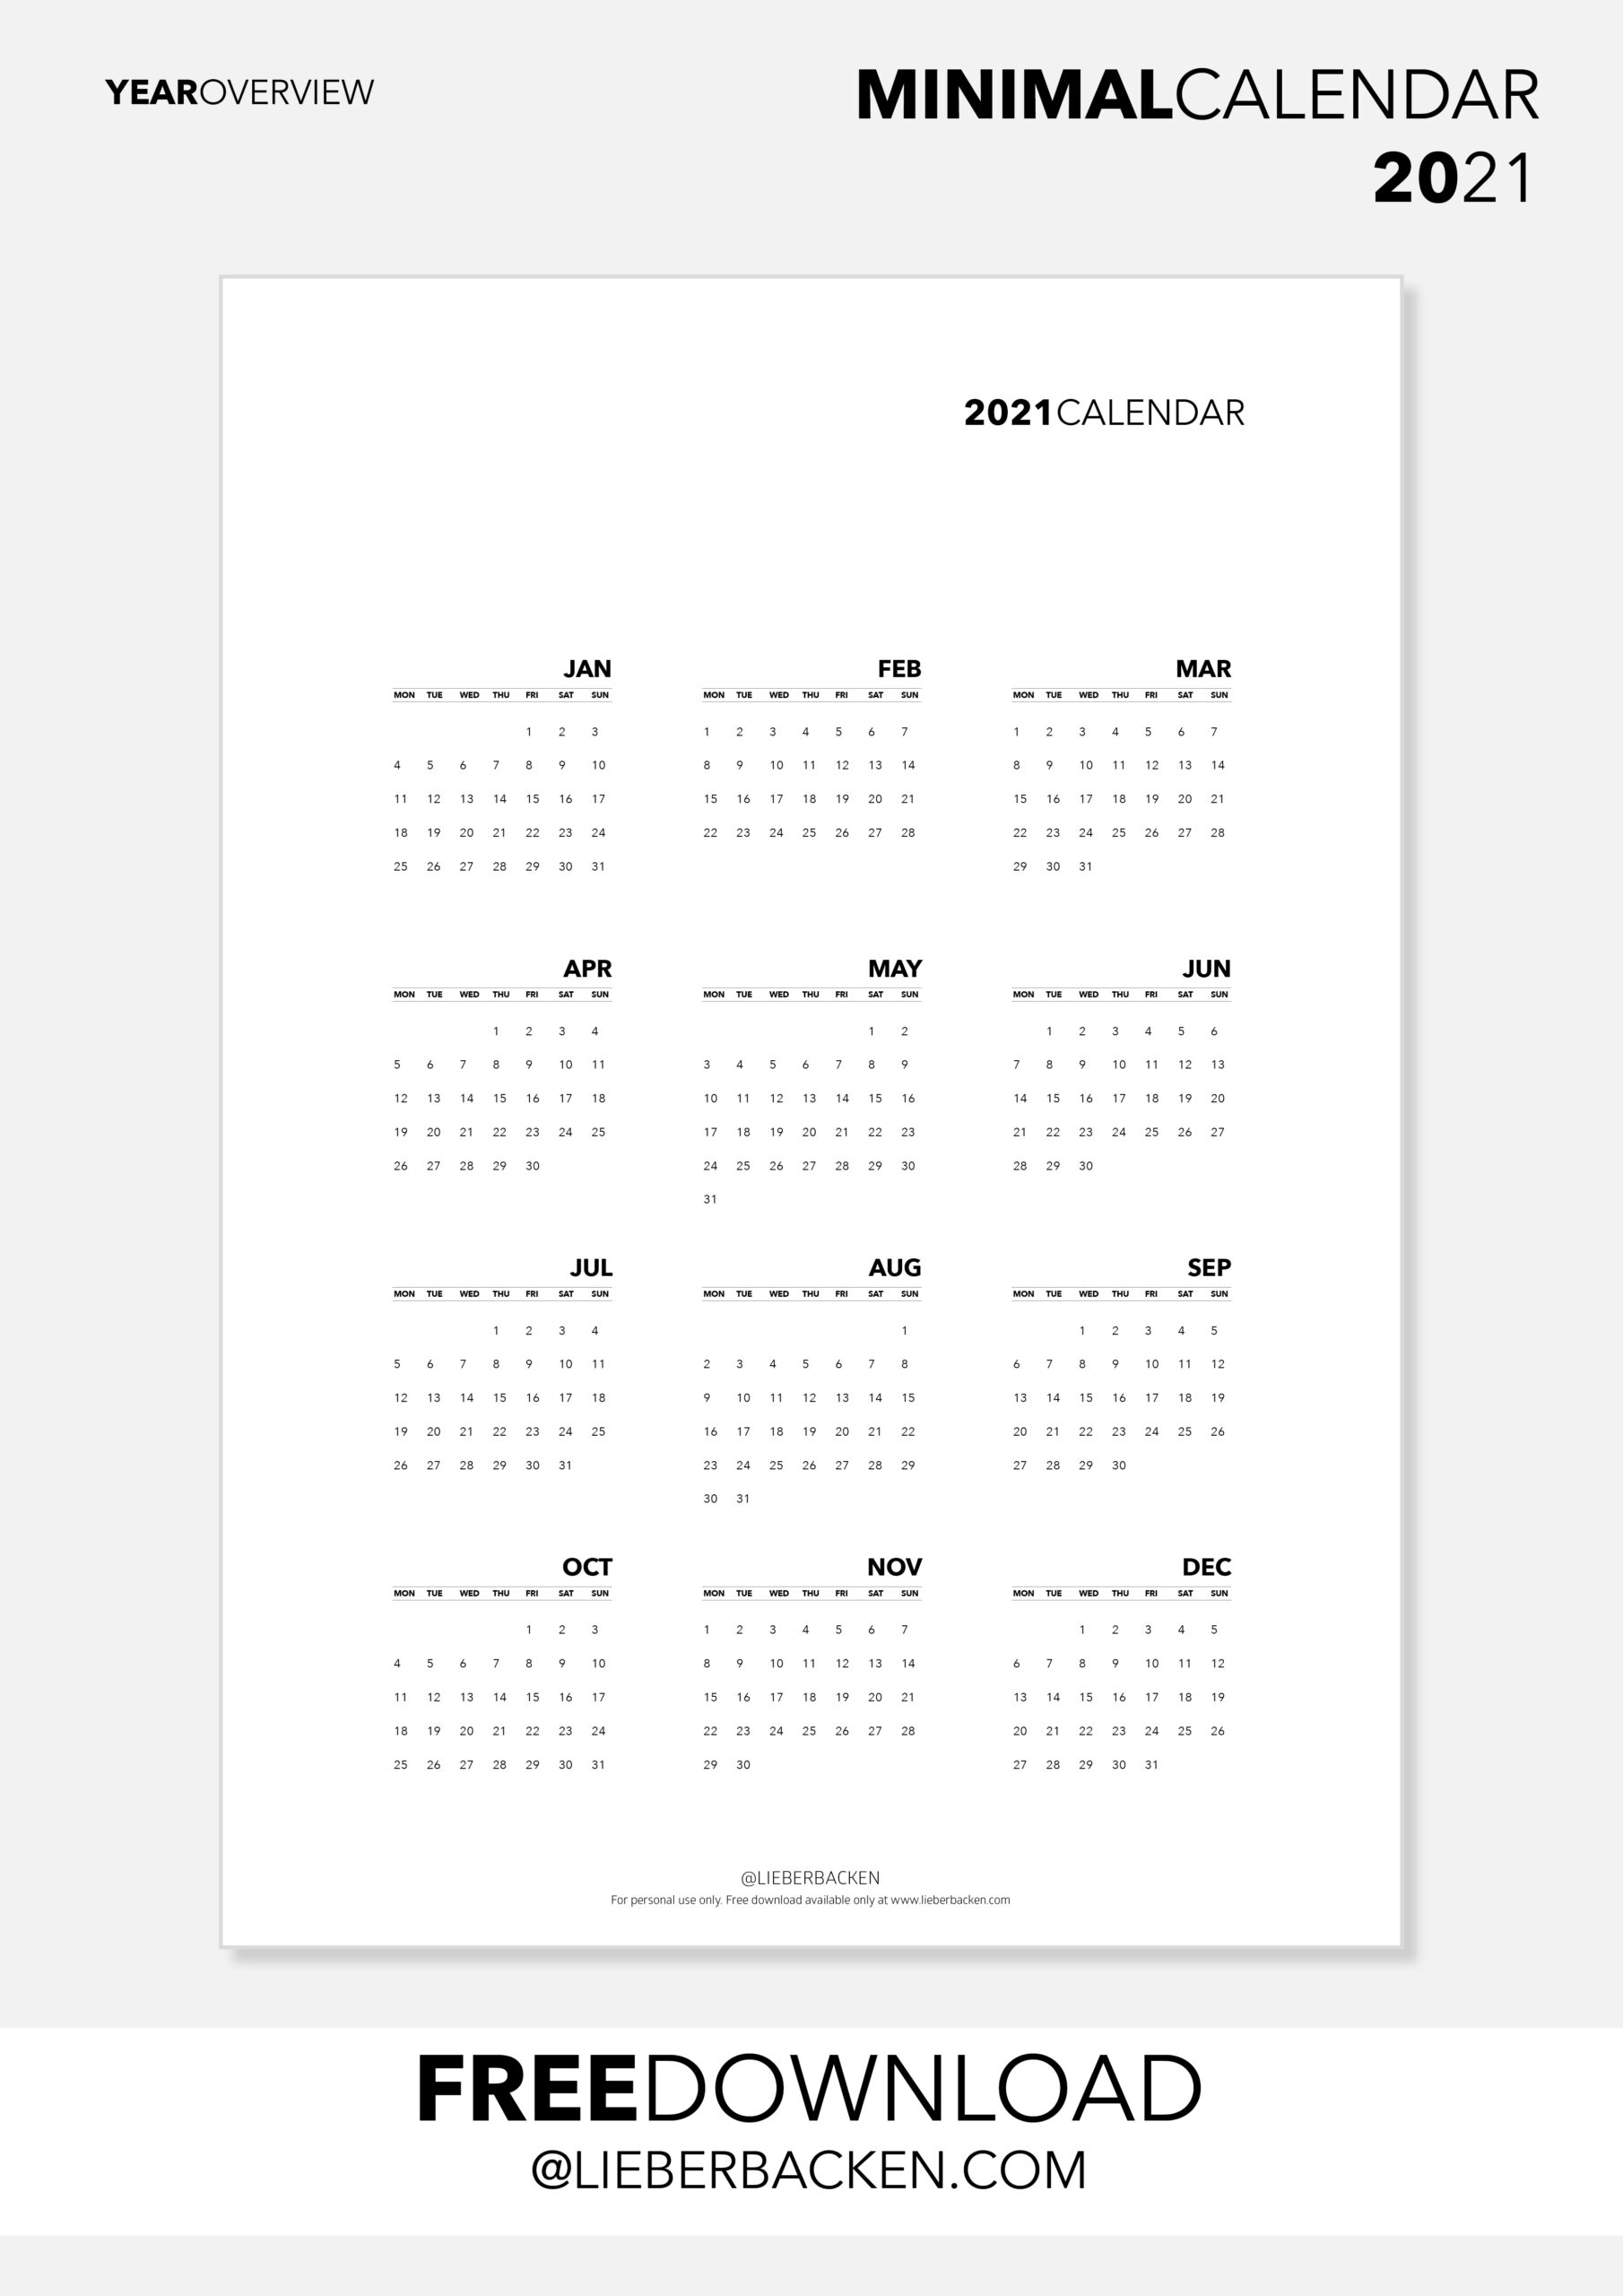 Yearly Overview 2021 | Minimal Calendar 2021 Free Download | Kostenloser Kalender 2021